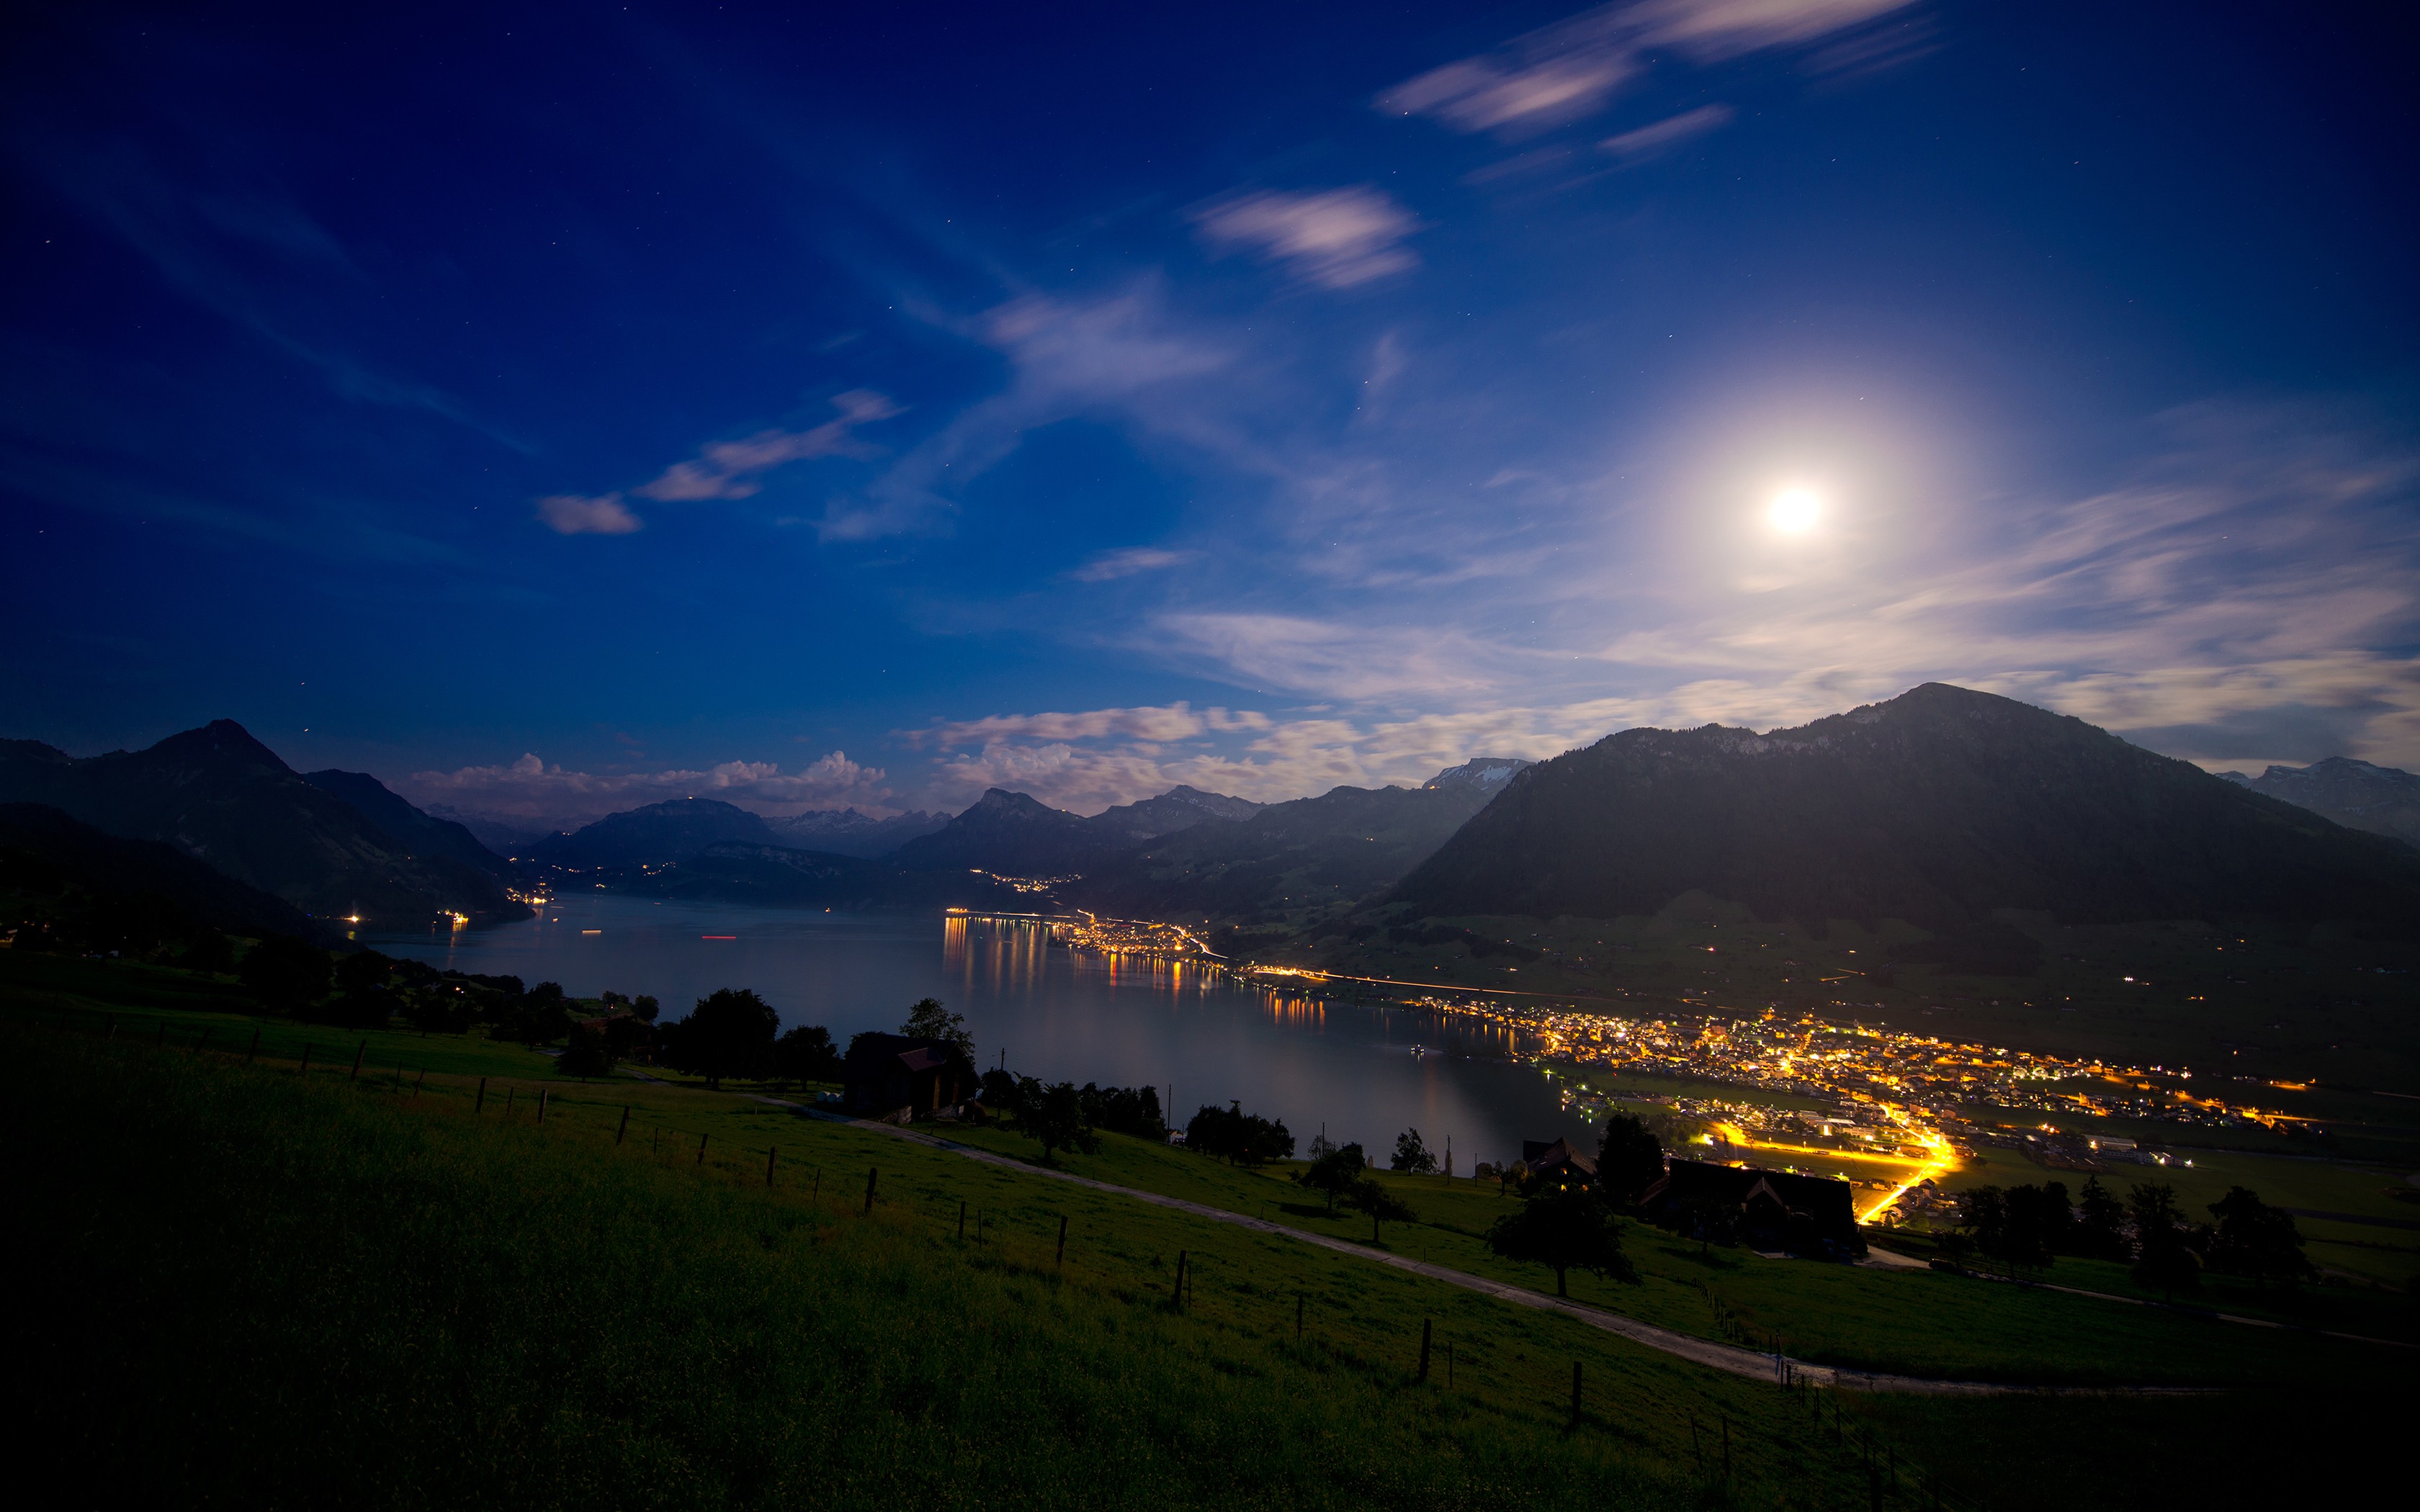 General 3360x2100 nature landscape lake city mountains lights Moon sky clouds grass Switzerland stars night low light